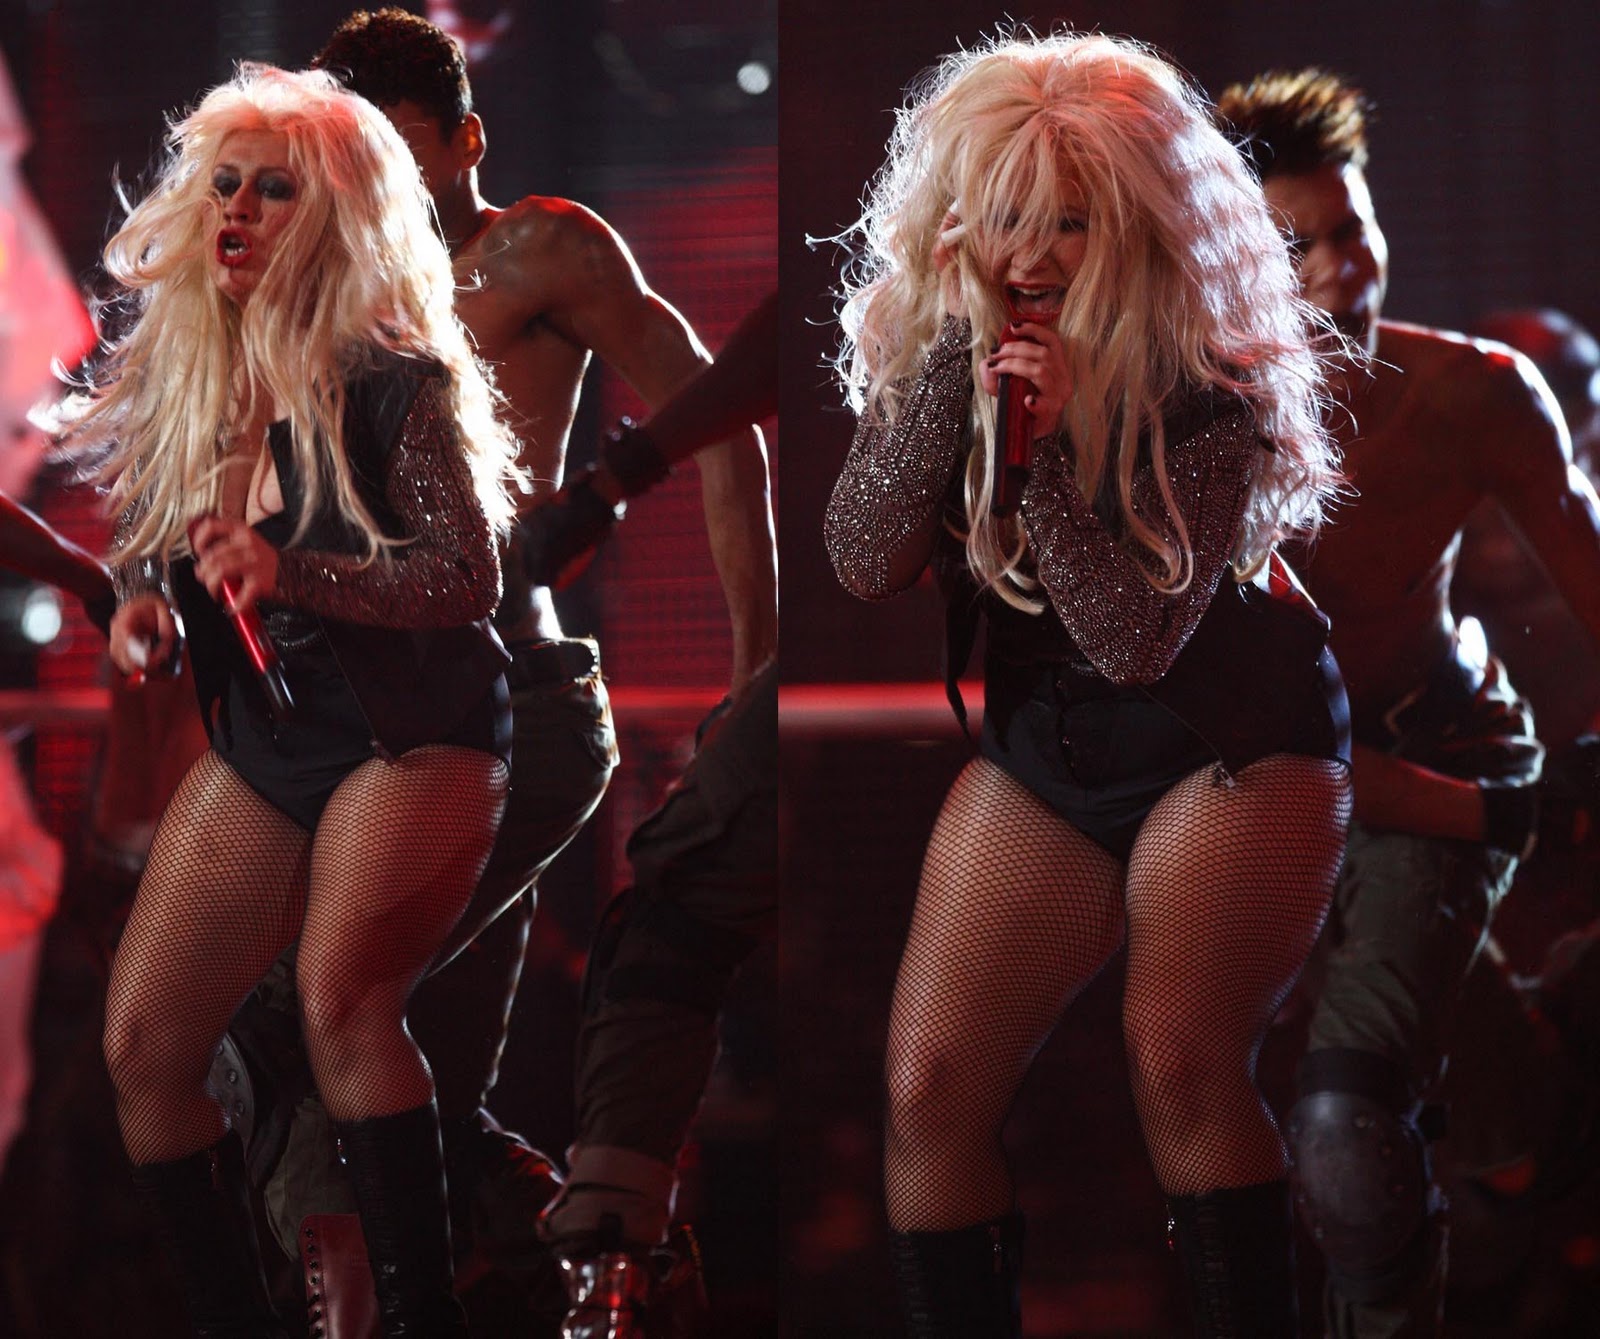 http://1.bp.blogspot.com/-wZIuX1ekc2Y/TpJuQvRREYI/AAAAAAAAAzo/HicVWVLO8ZE/s1600/FAT-Christina-Aguilera-Michael-Jackson-Tribute-Concert.jpg